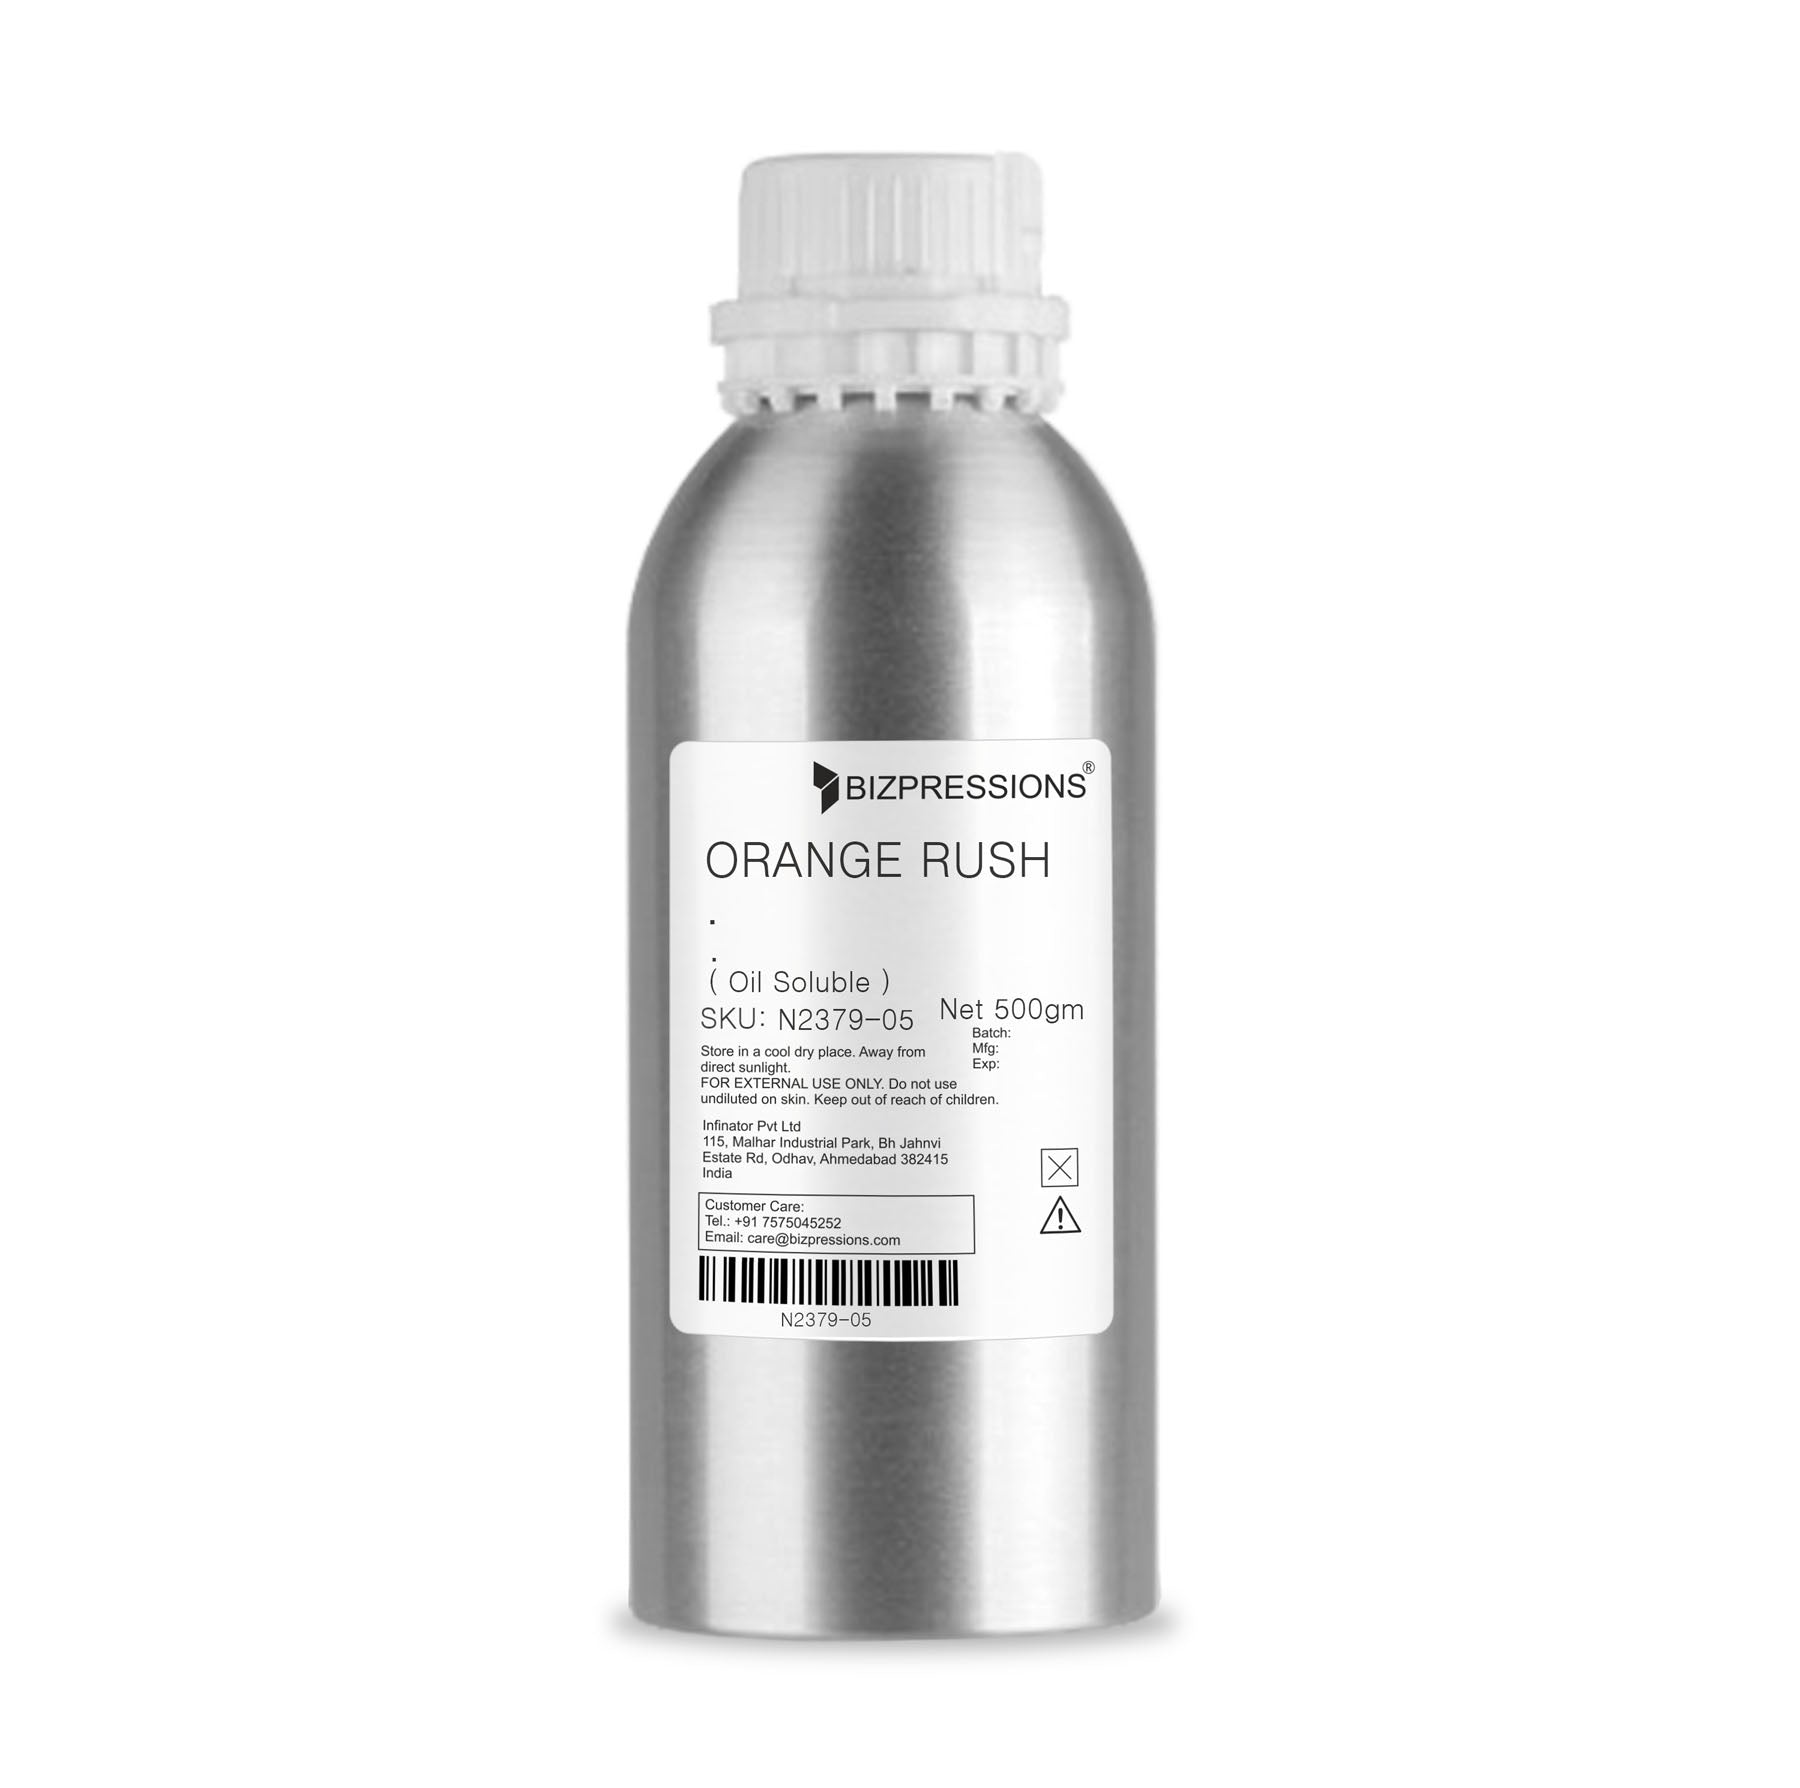 ORANGE RUSH - Fragrance ( Oil Soluble ) - 500 gm